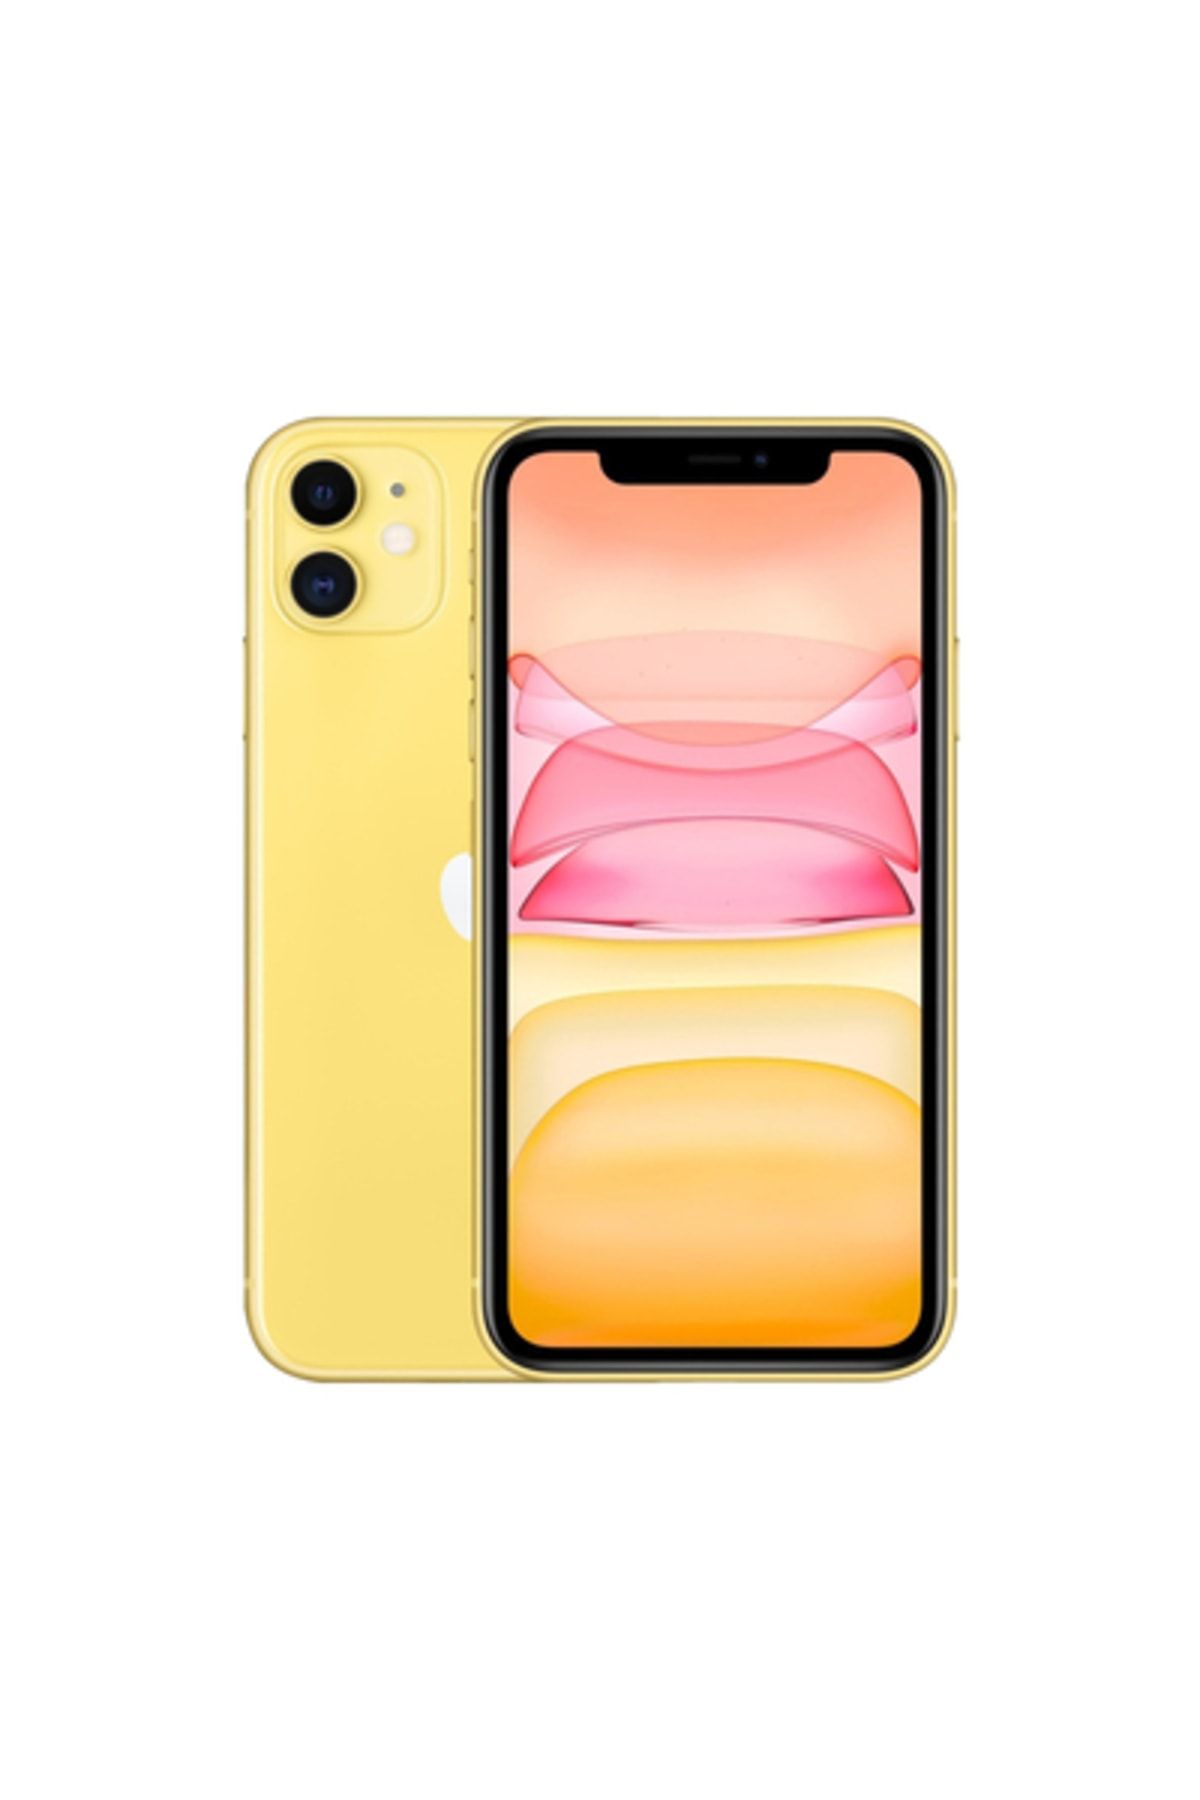 Apple Yenilenmiş Iphone 11 128 Gb Sarı B Grade